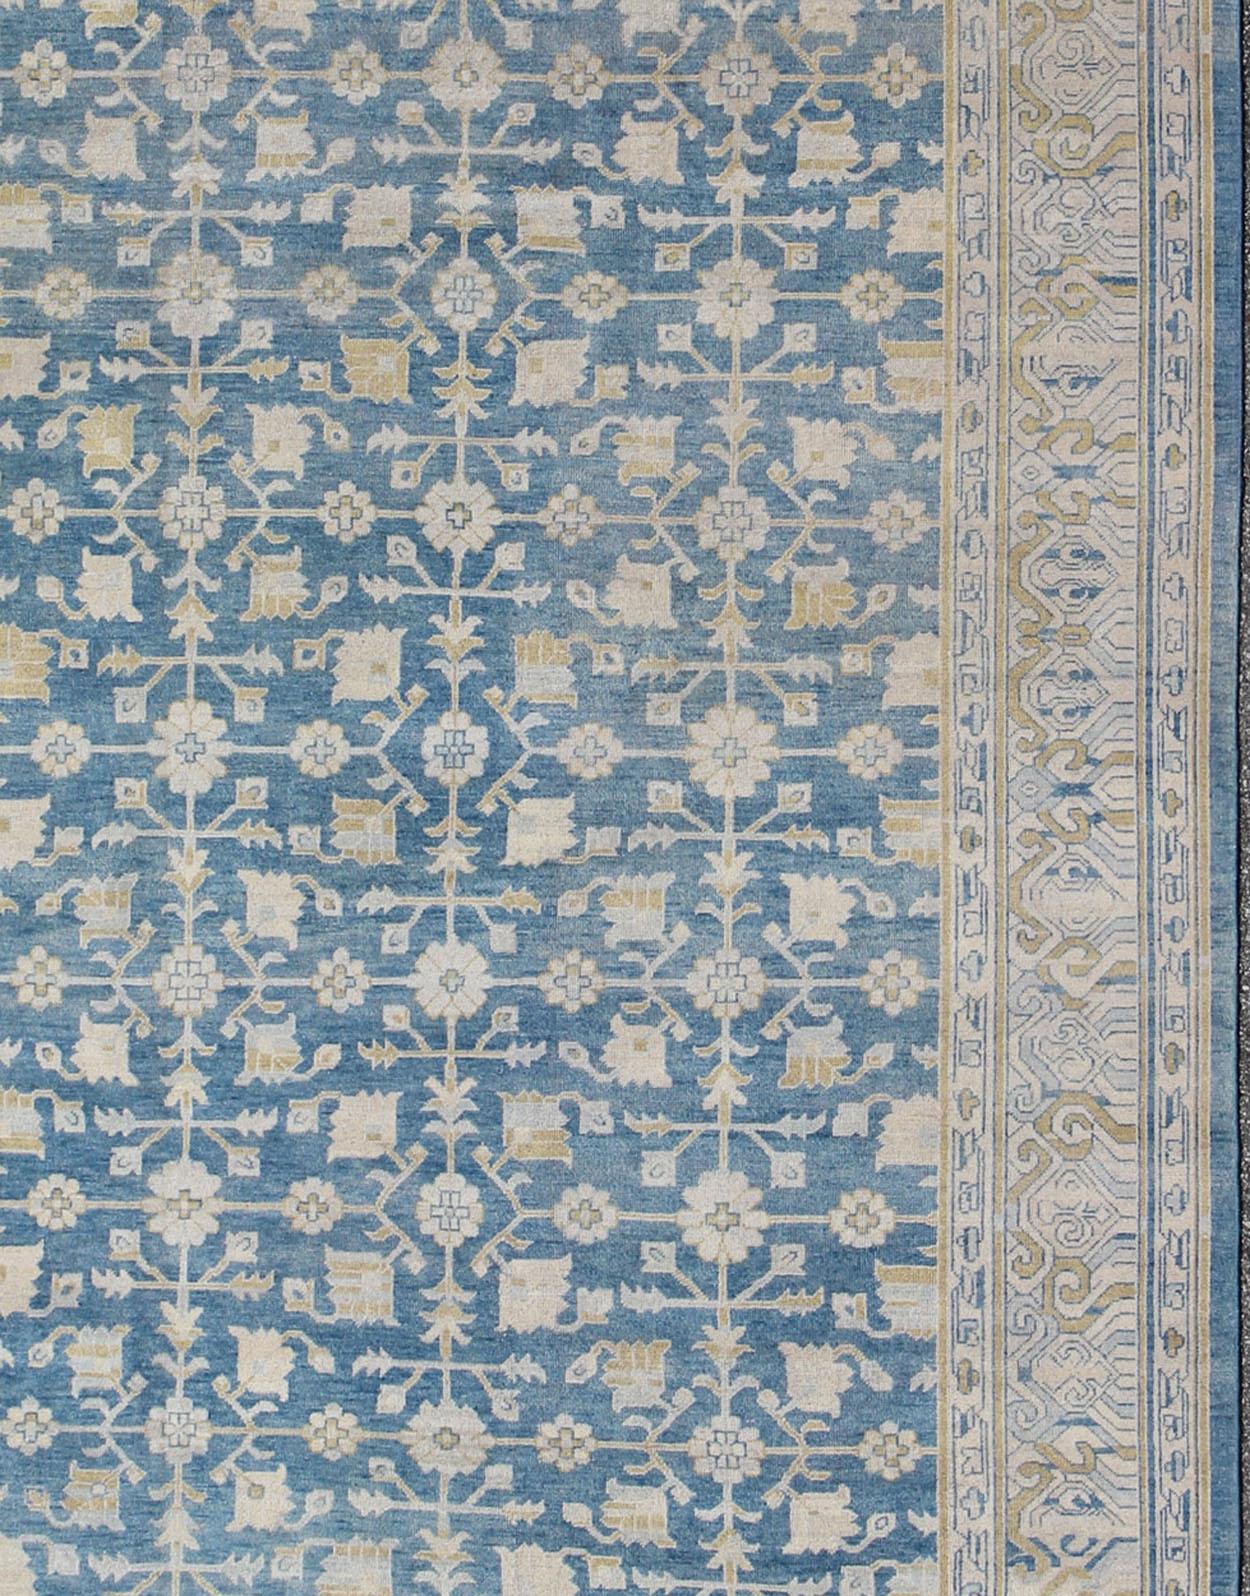 Khotan Design rug, rug OB-9333890-592044, country of origin / type: India / Khotan, circa Early-21st Century.


Measures: 10'0 x 14'0.